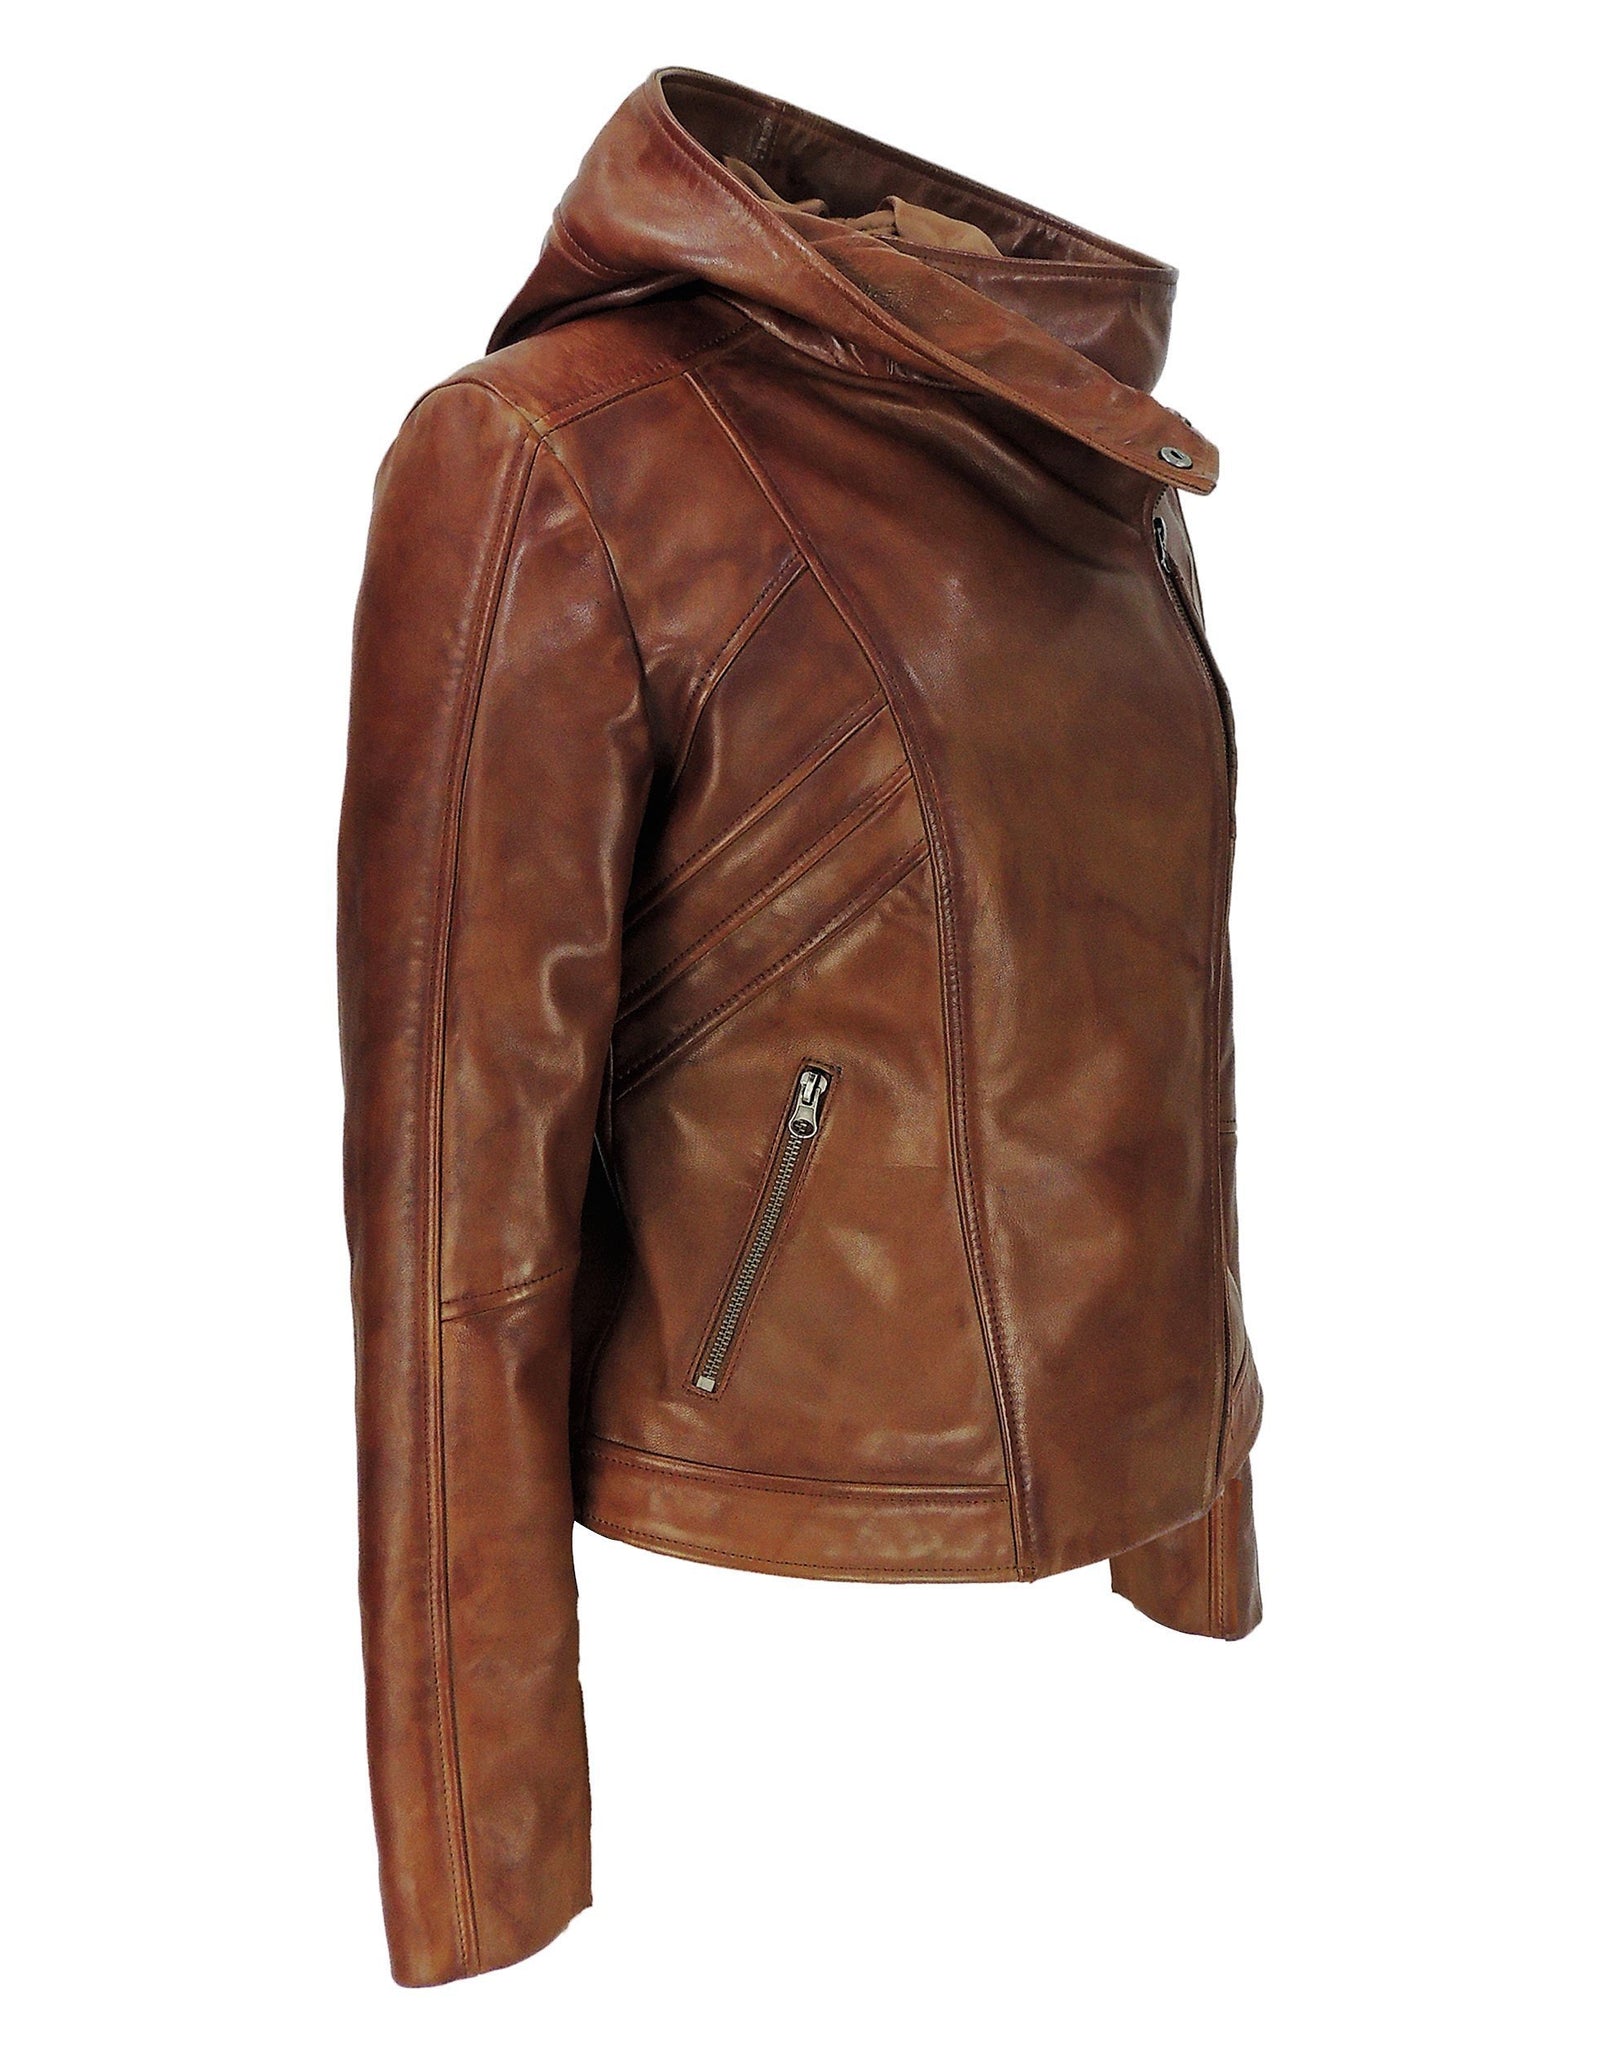 Sasha High Fashion Womens Hooded Leather Jacket